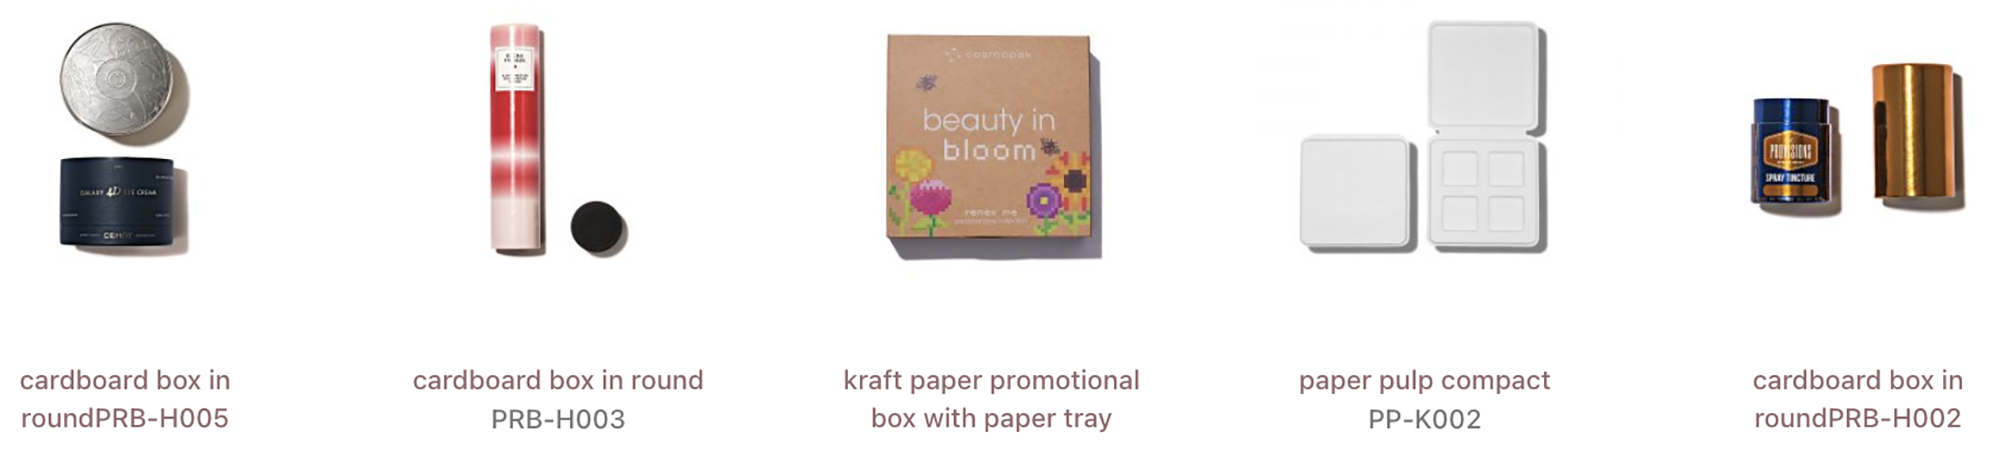 cosmopak paper beauty packaging examples